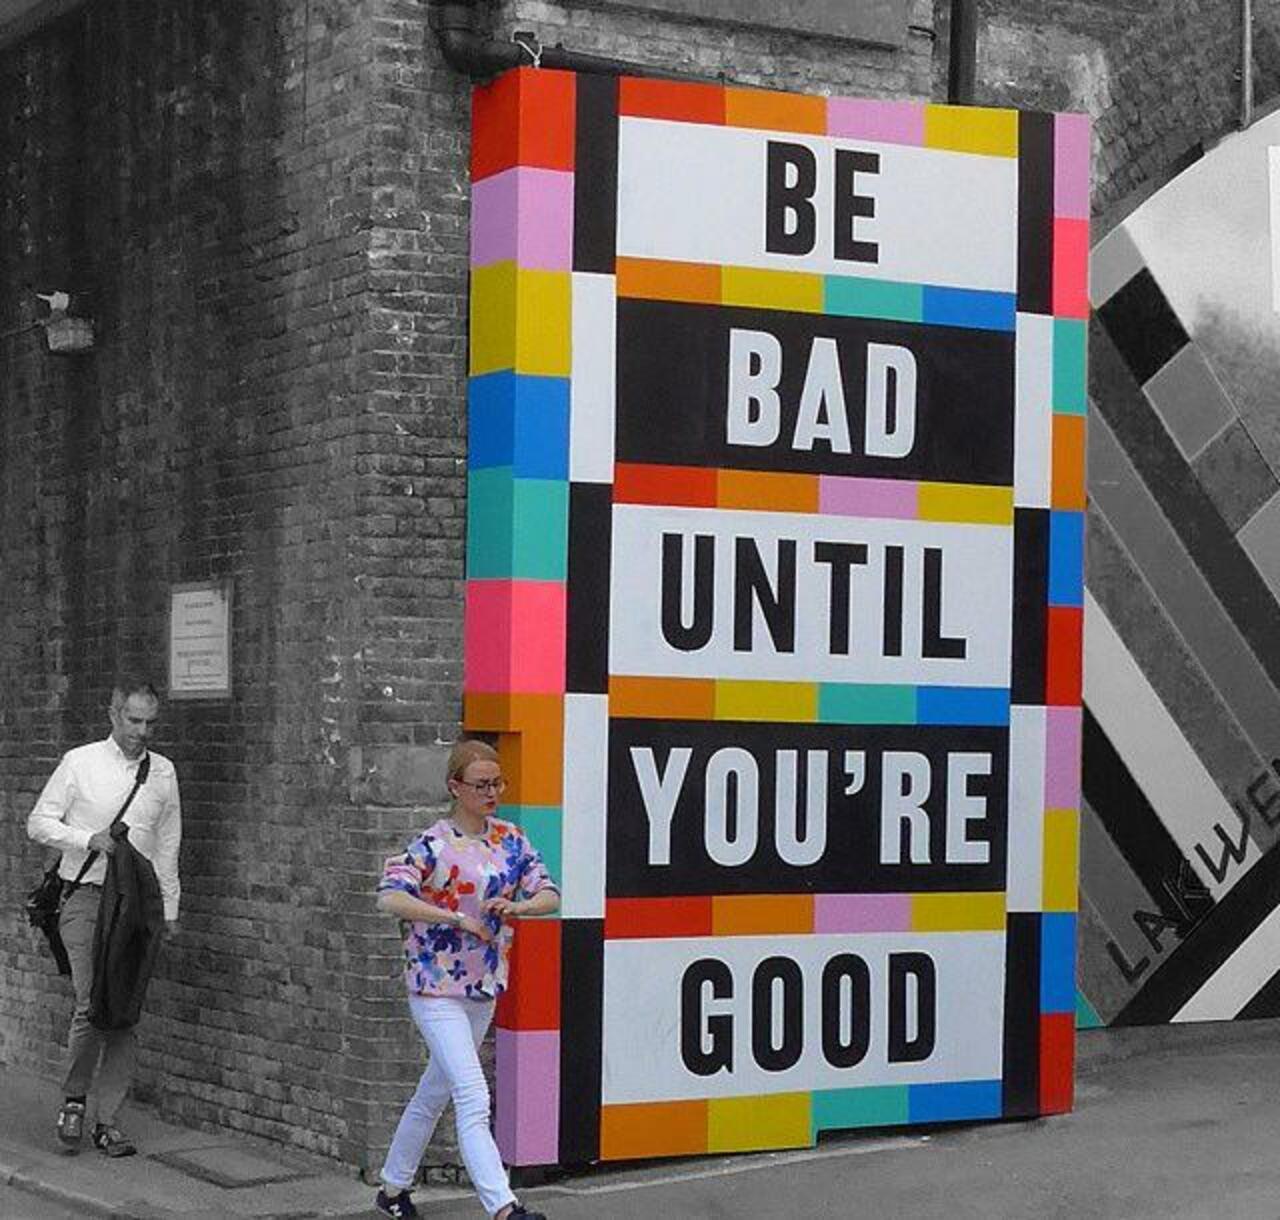 RT @GoogleStreetArt: Be bad until you're good... 

Street Art by Lakwena in London 
#art #arte #graffiti #streetart http://t.co/dyXbta2QUj